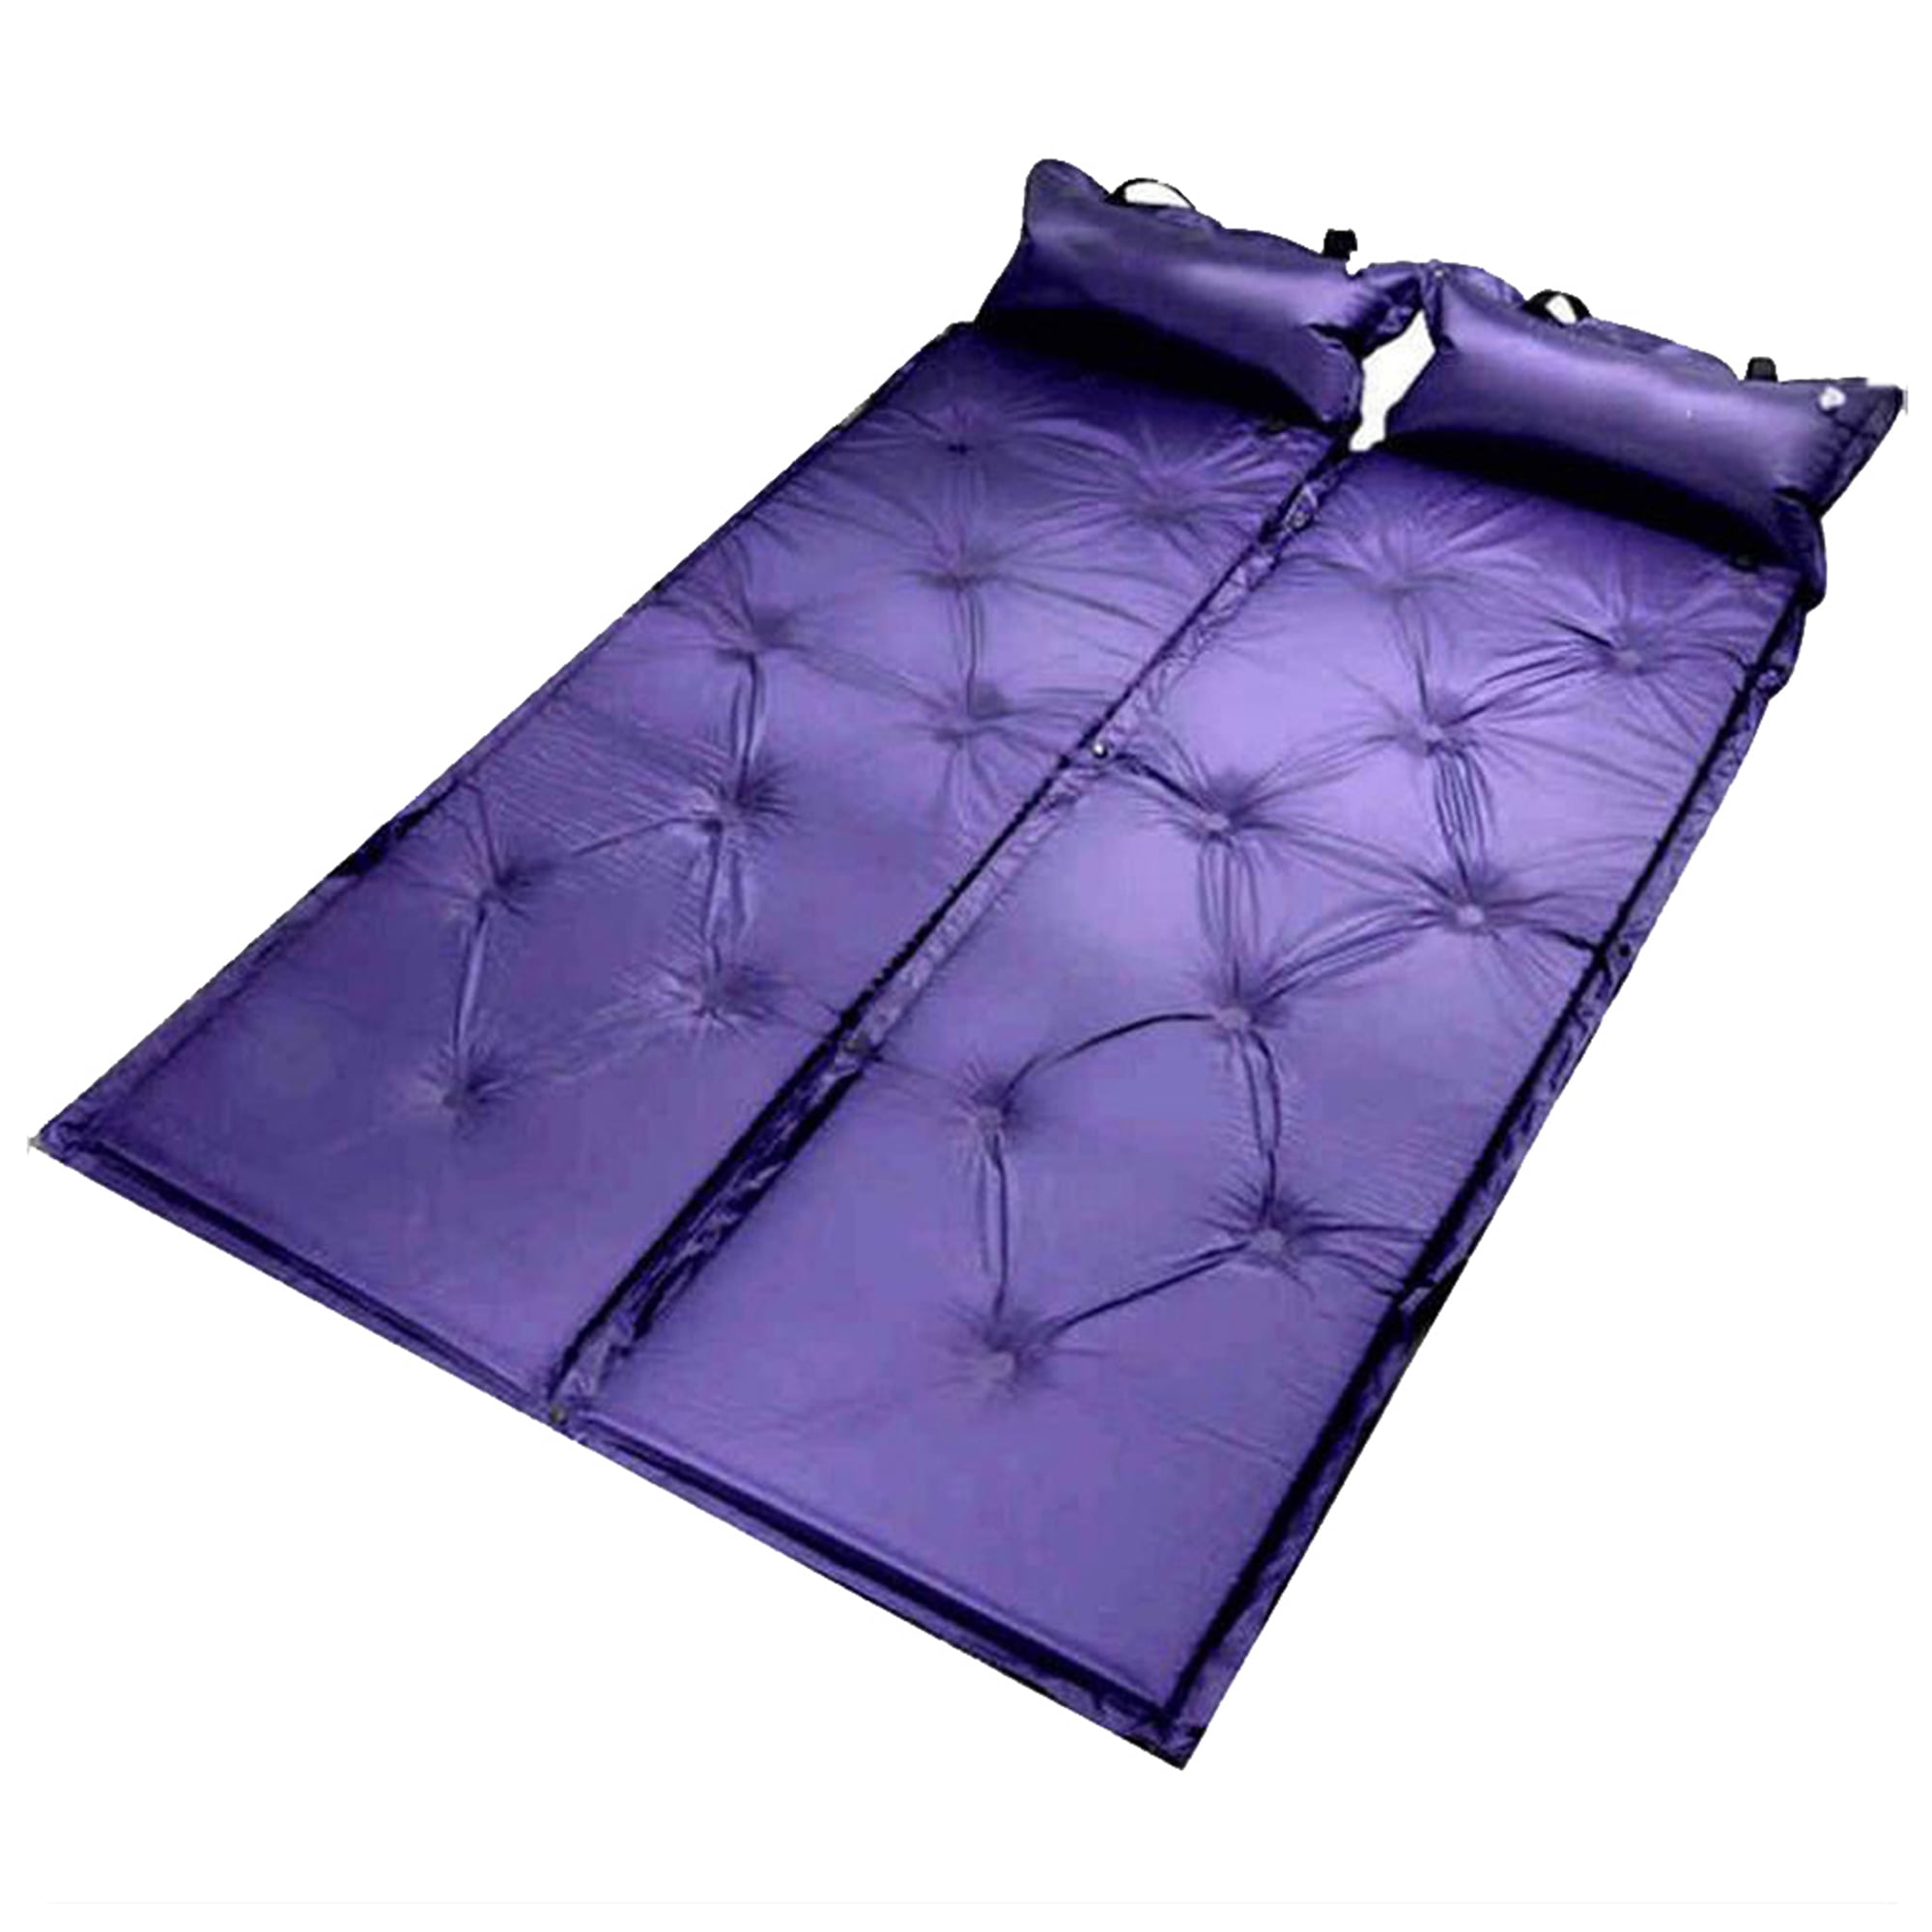 Self Inflating Camping Sleeping Pad Portable Travel Hiking Mat Mattress Pillow 